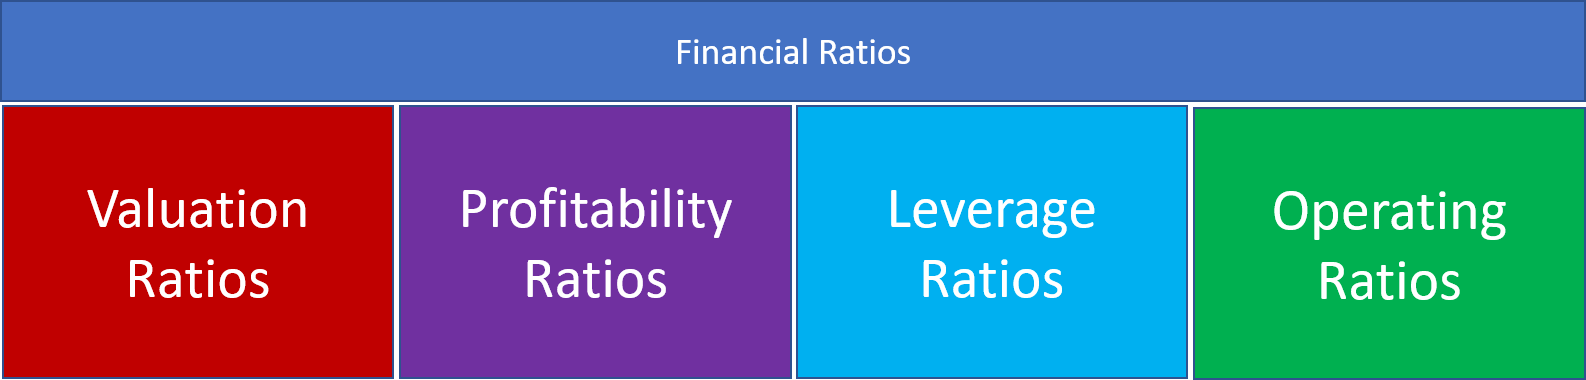 Financial Ratios & its Analysis